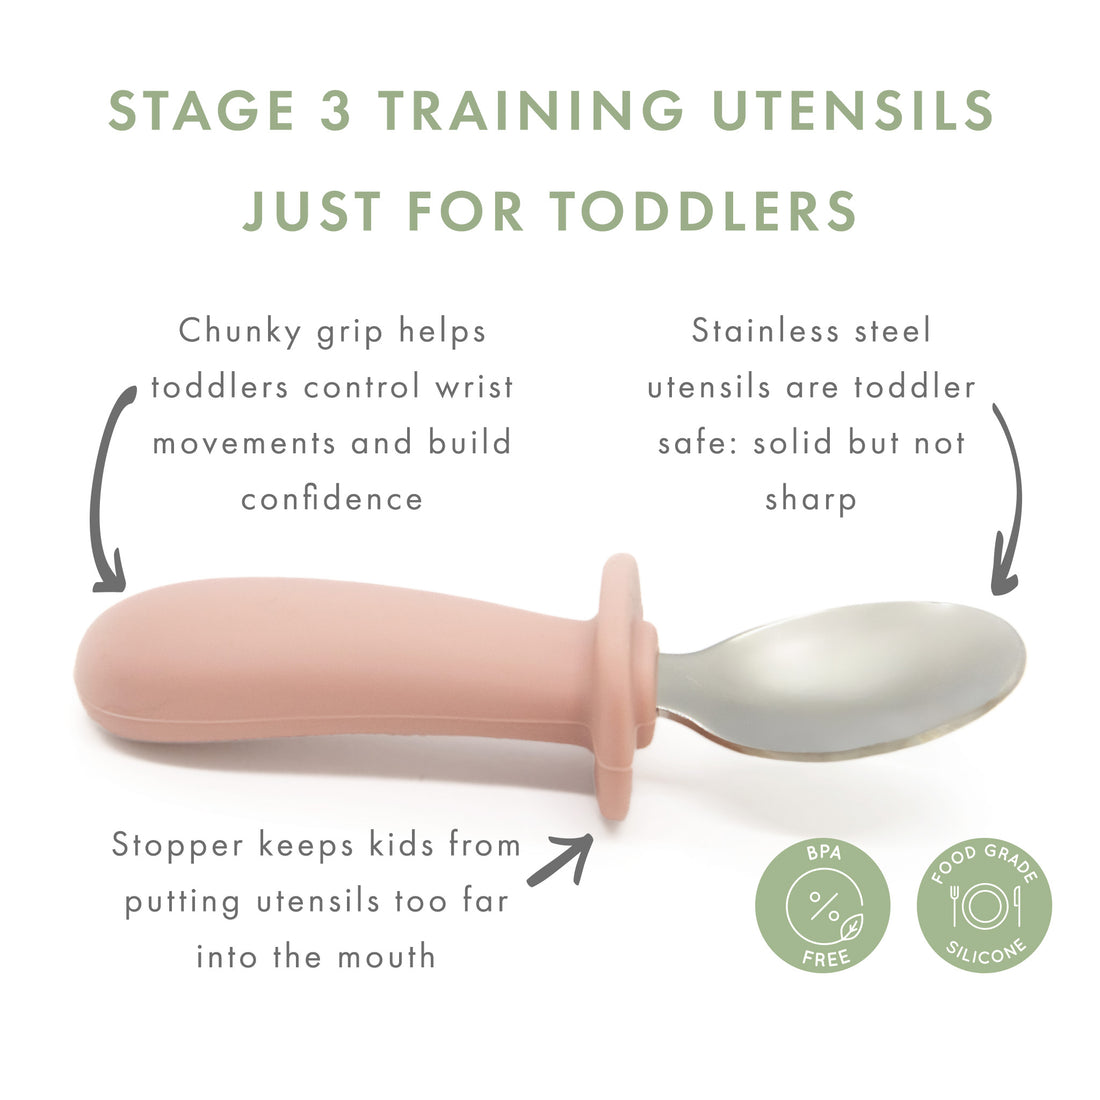 Stage 3: Toddler Training Utensils